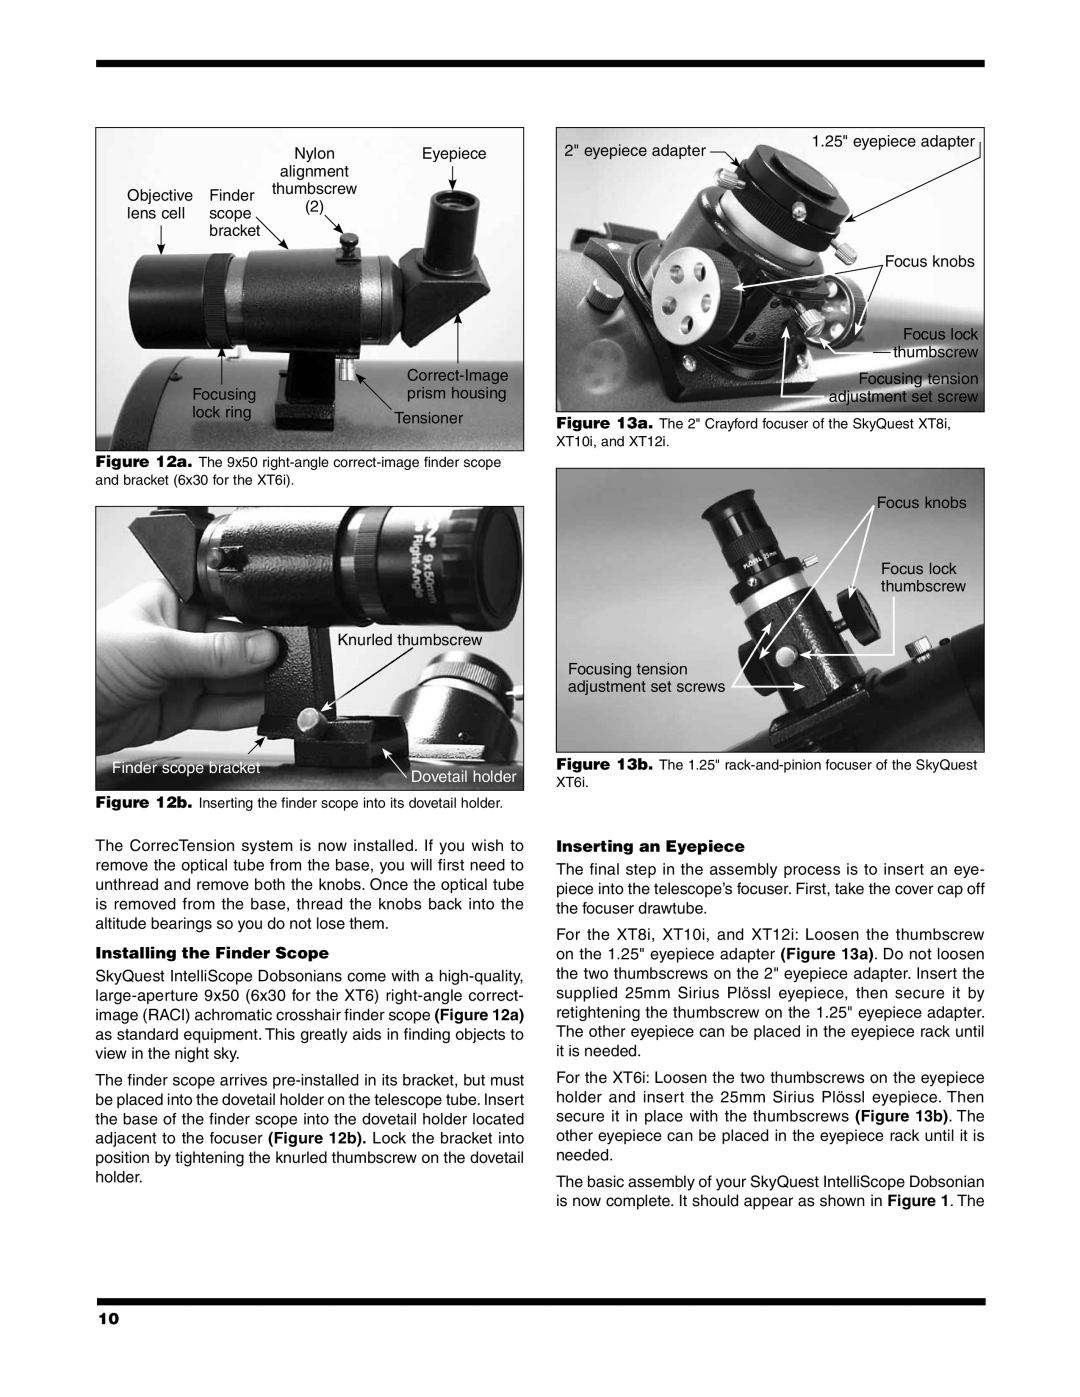 Orion 10018 XT8i, 10026 XT6i, 10020 XT12i Finder scope bracket, Installing the Finder Scope, Inserting an Eyepiece 